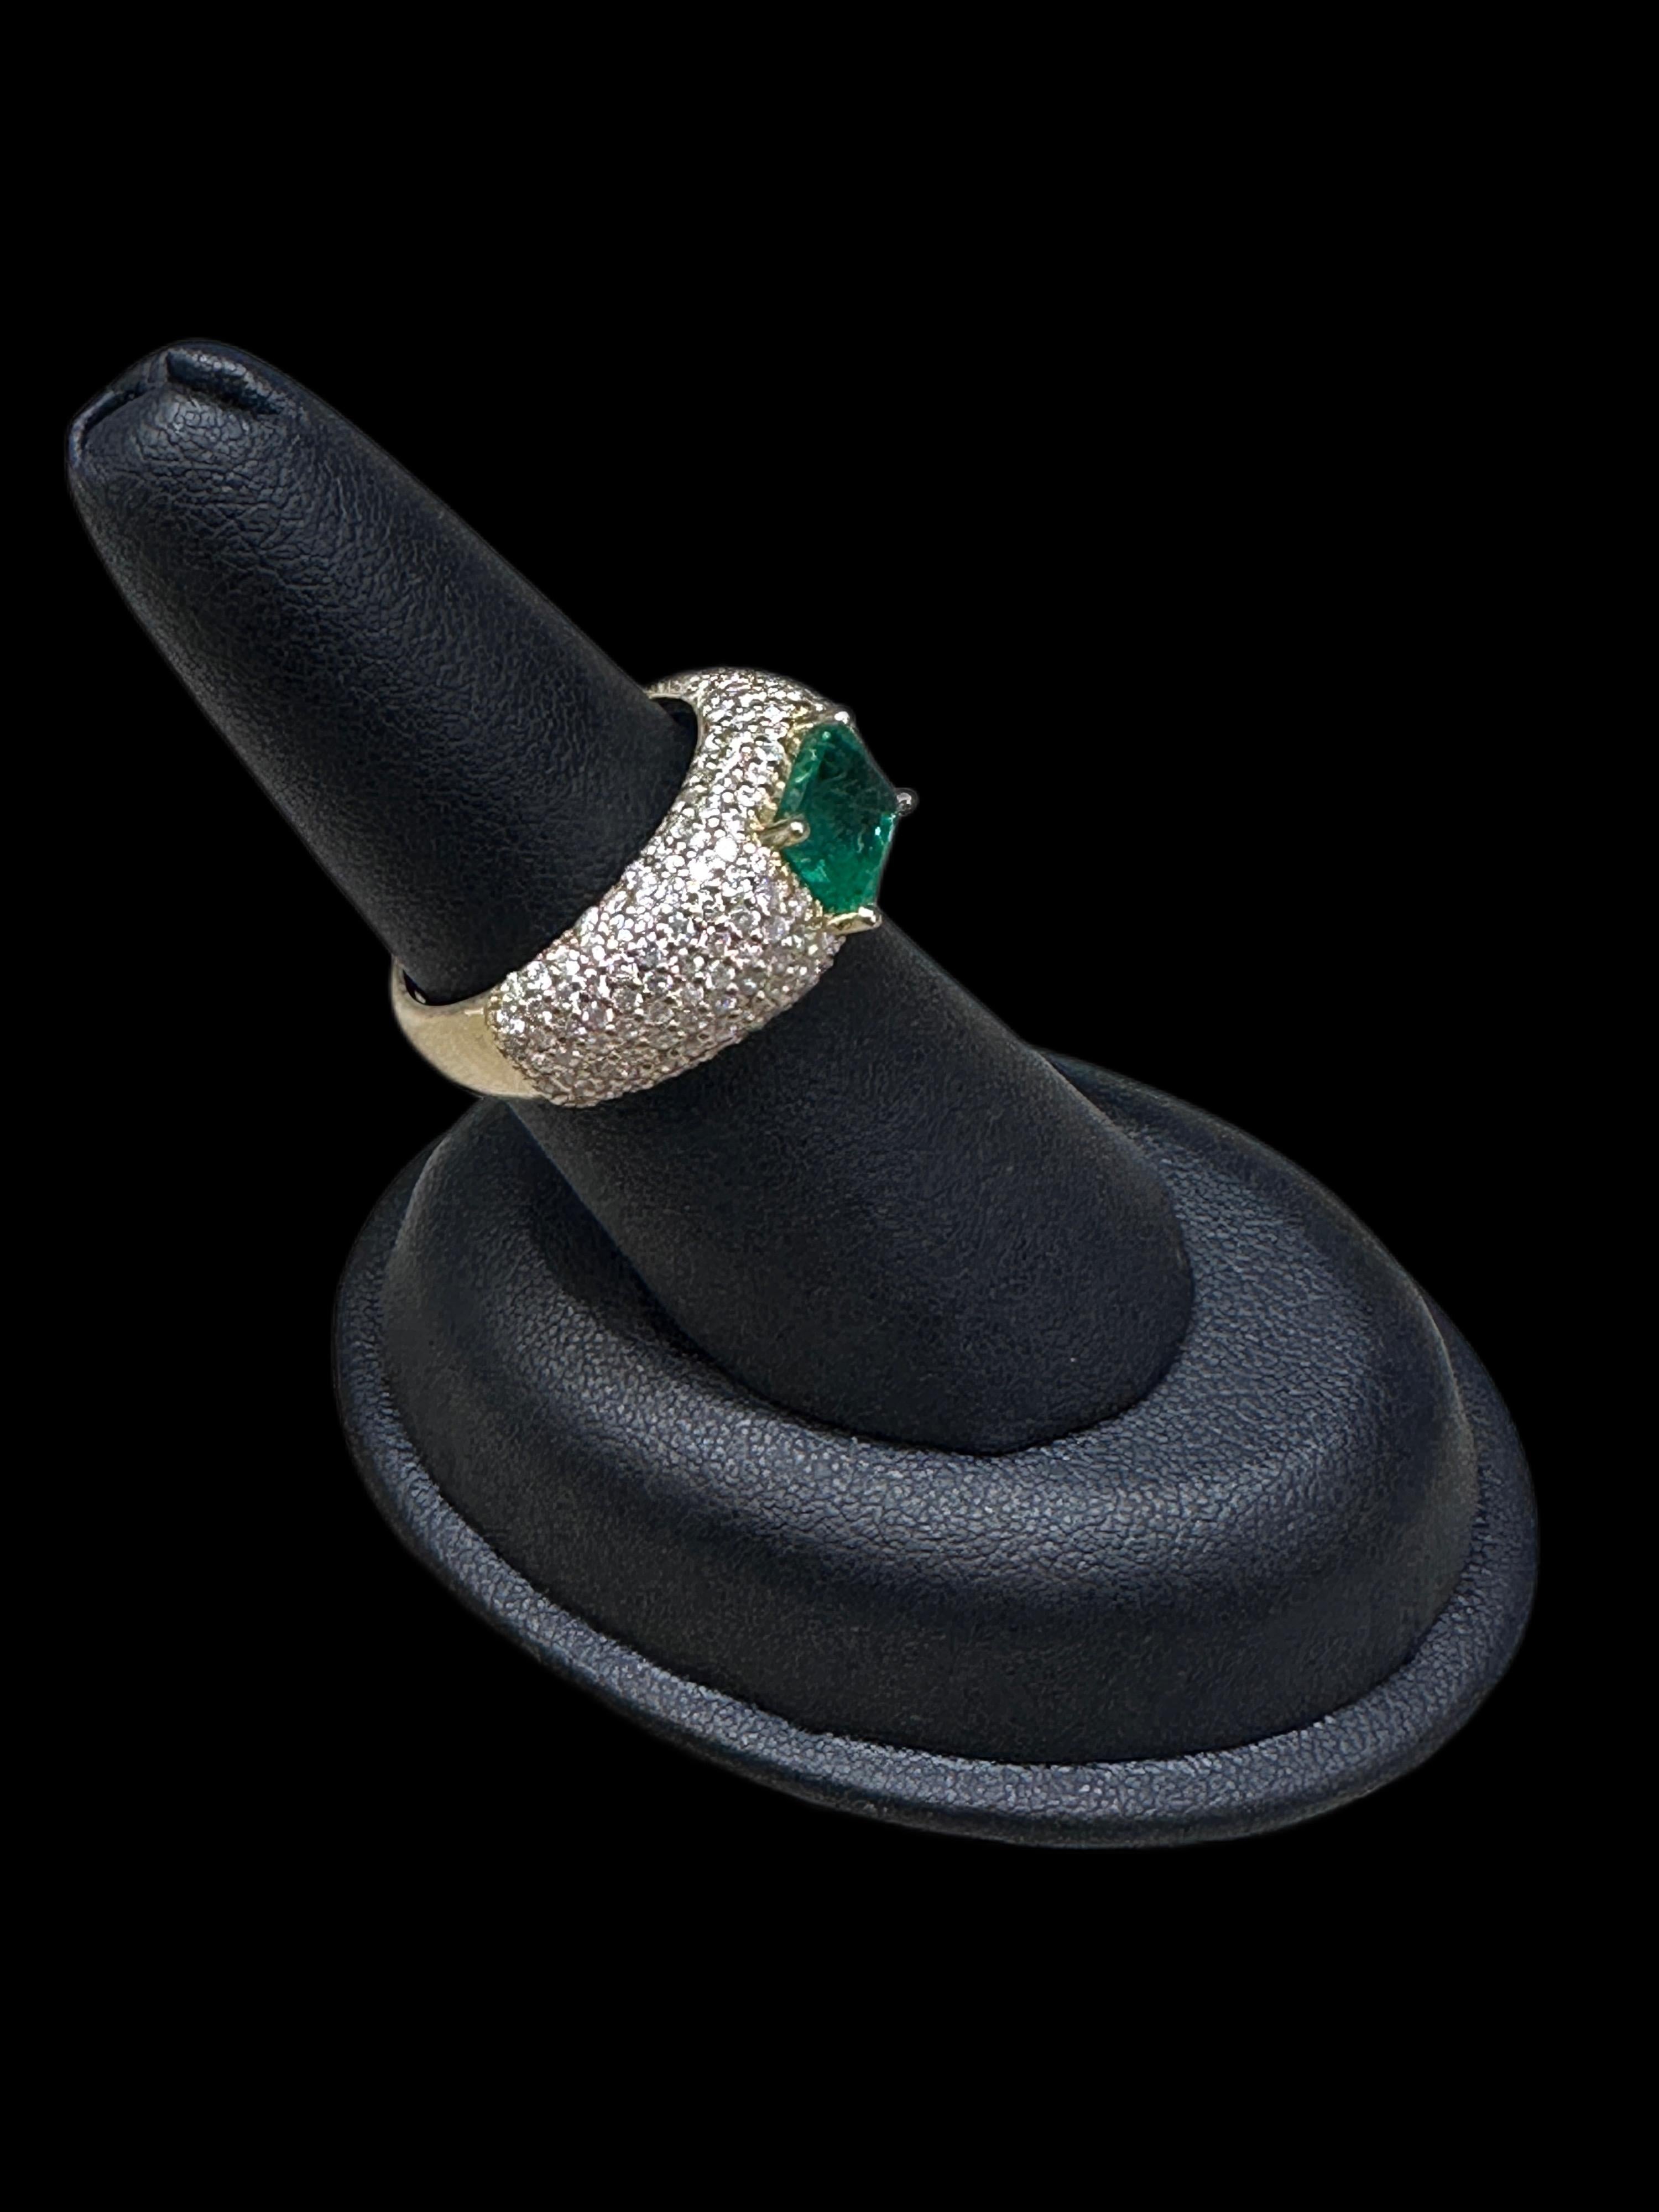 For Sale:  14K Yellow Gold, Emerald Cut Emerald Bomber Ring w/ Diamonds 4